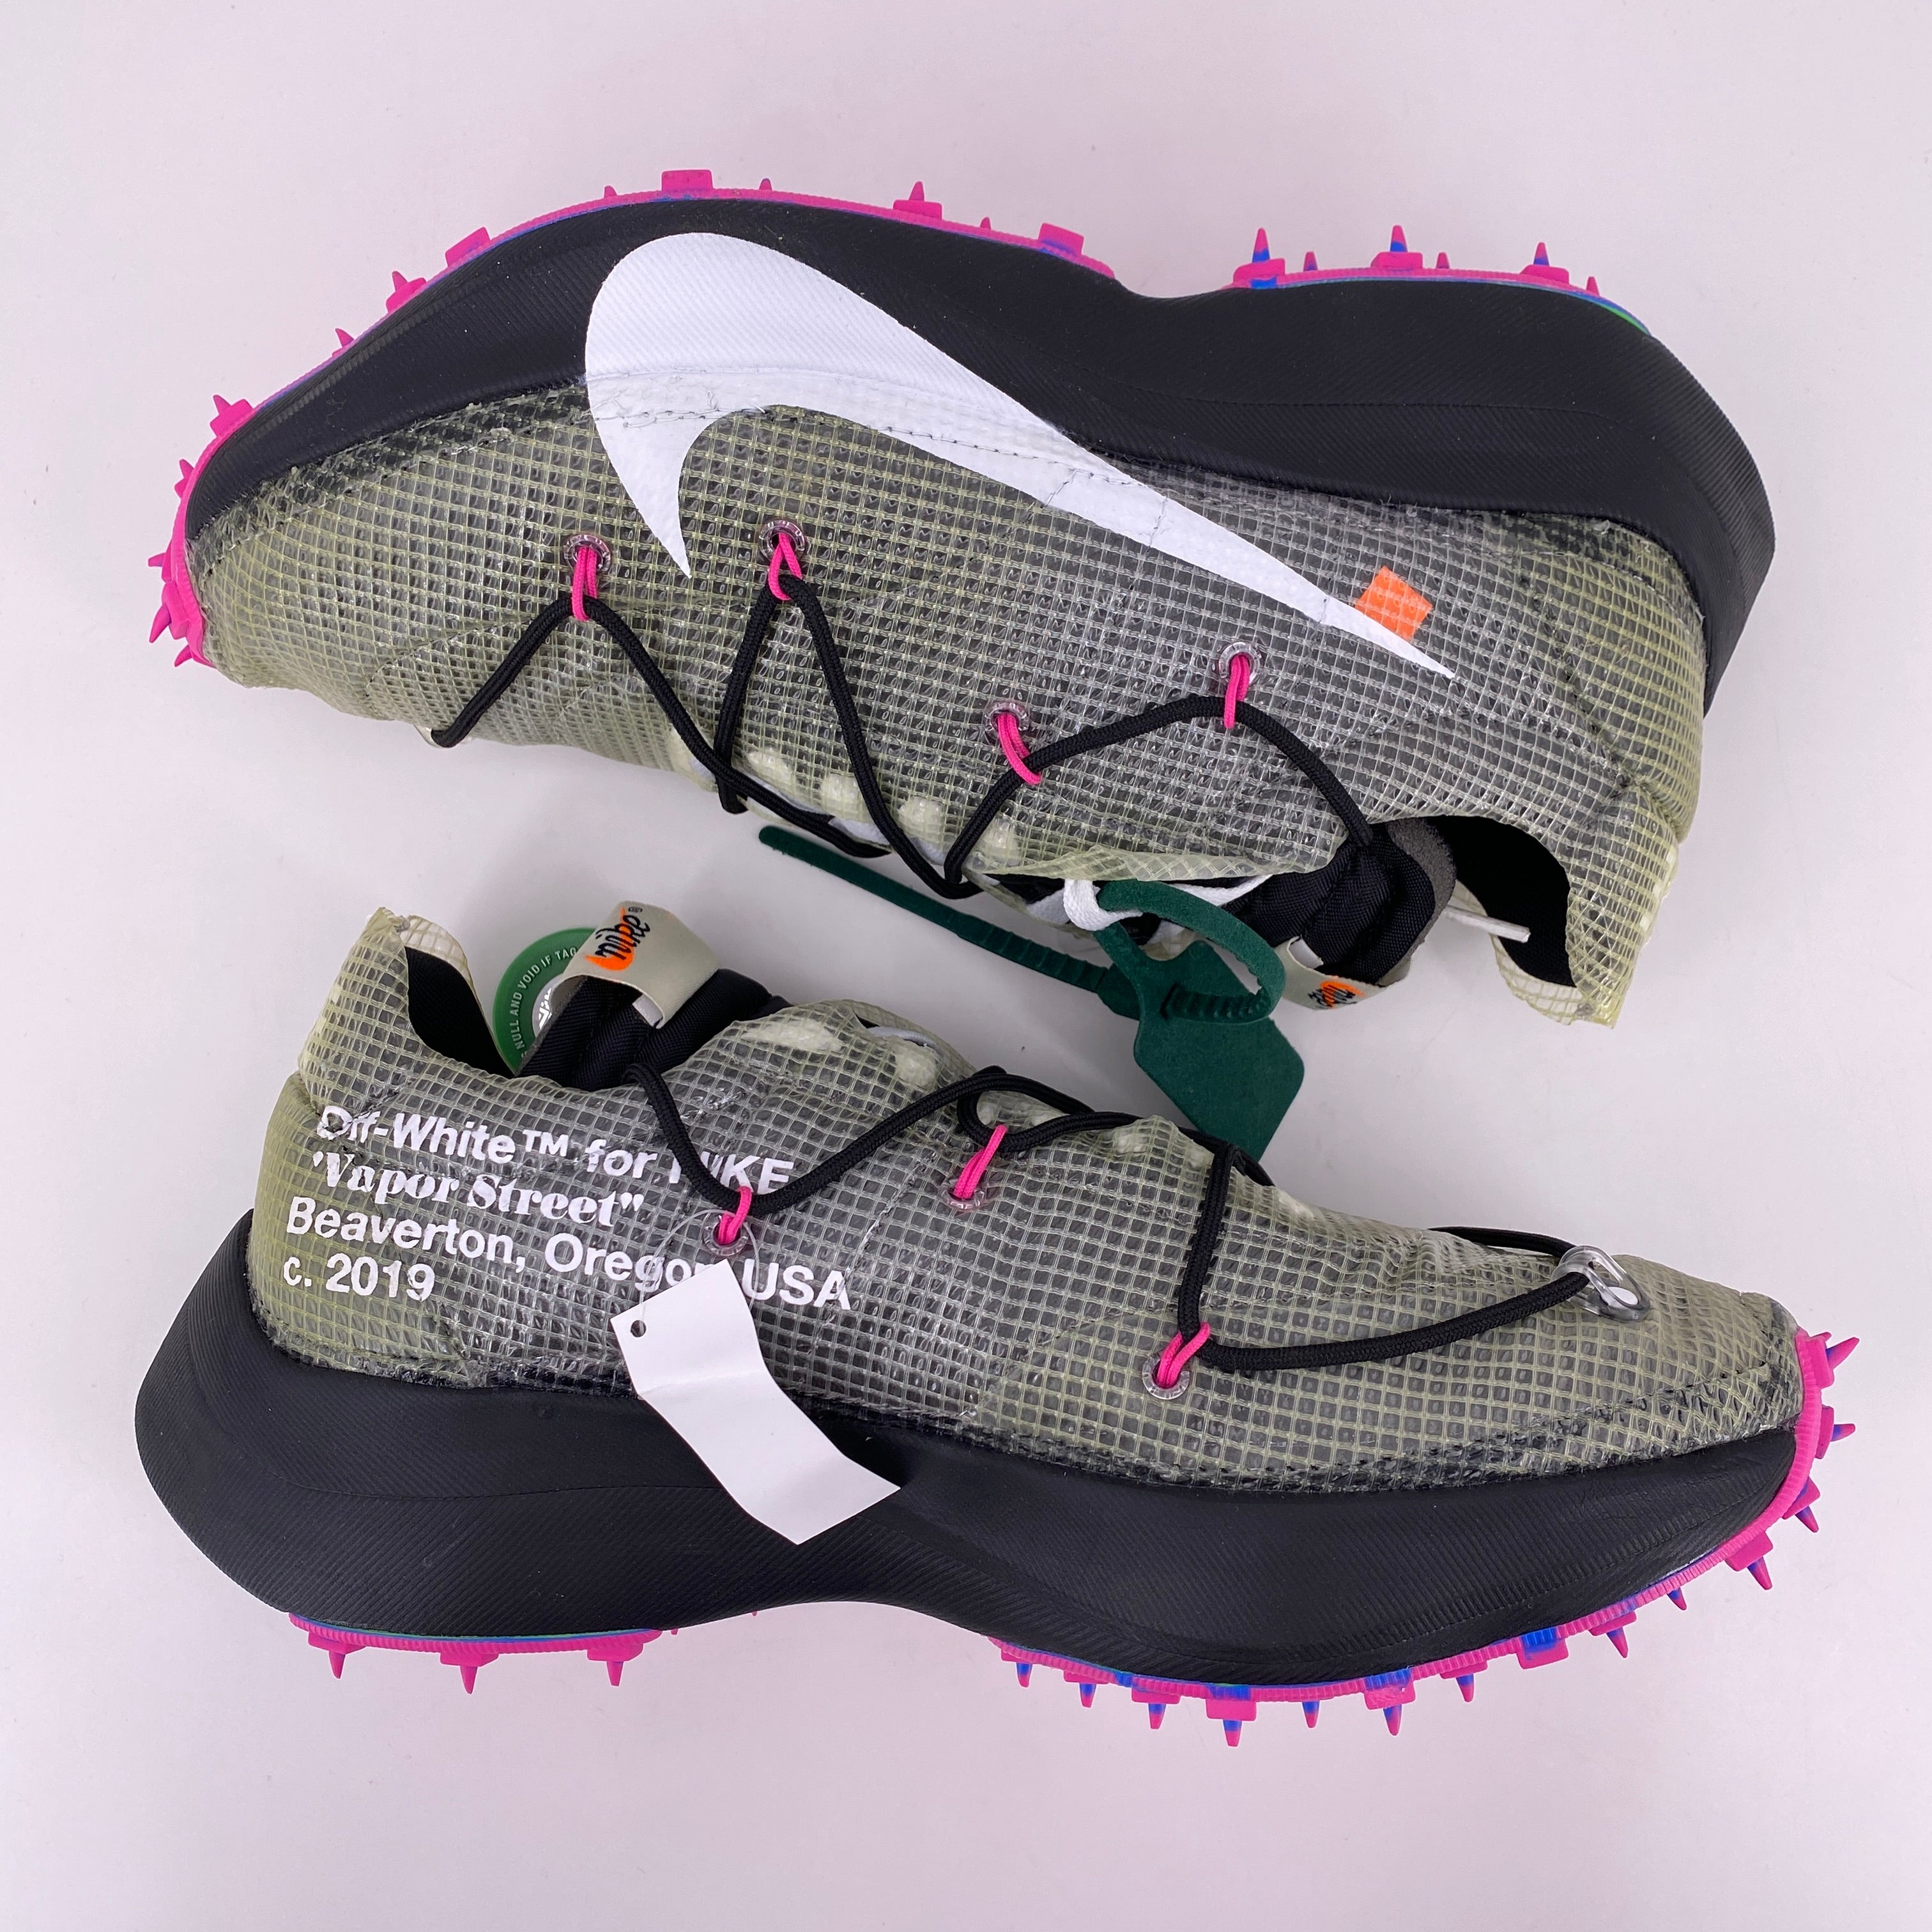 Nike (W) Vapor Street / OW "Fuchsia" 2019 New Size 12.5W